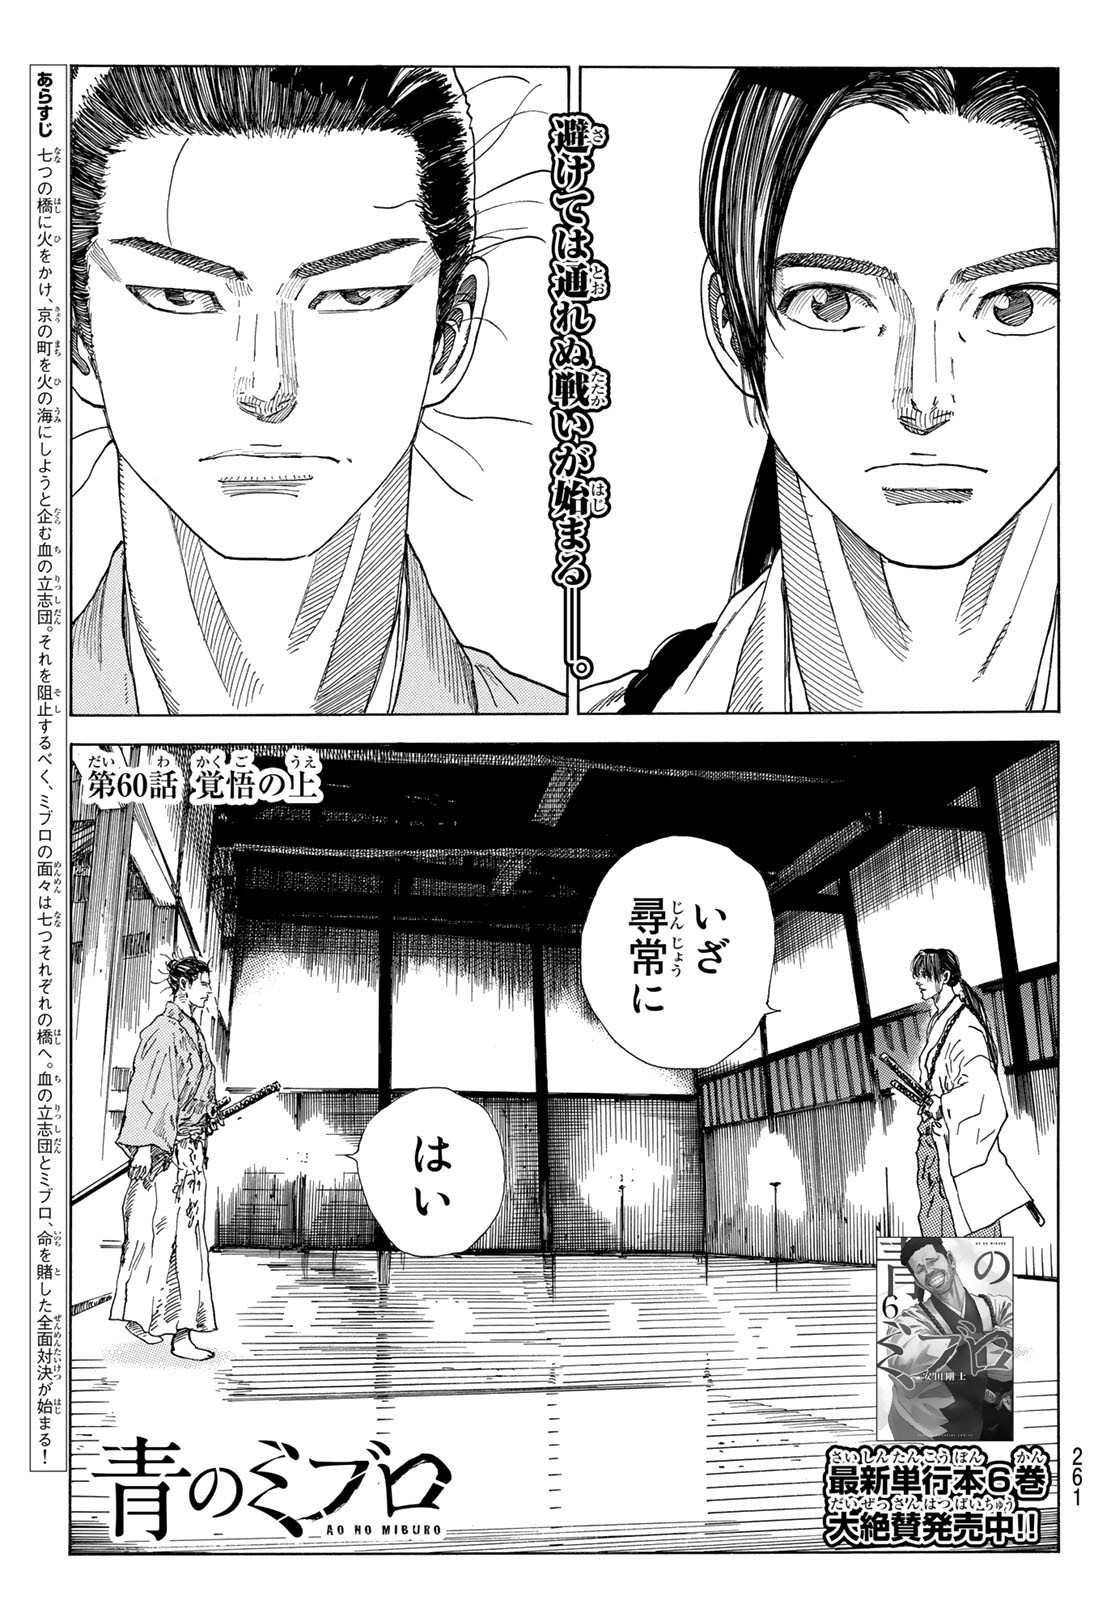 Ao no Miburo - Chapter 060 - Page 1